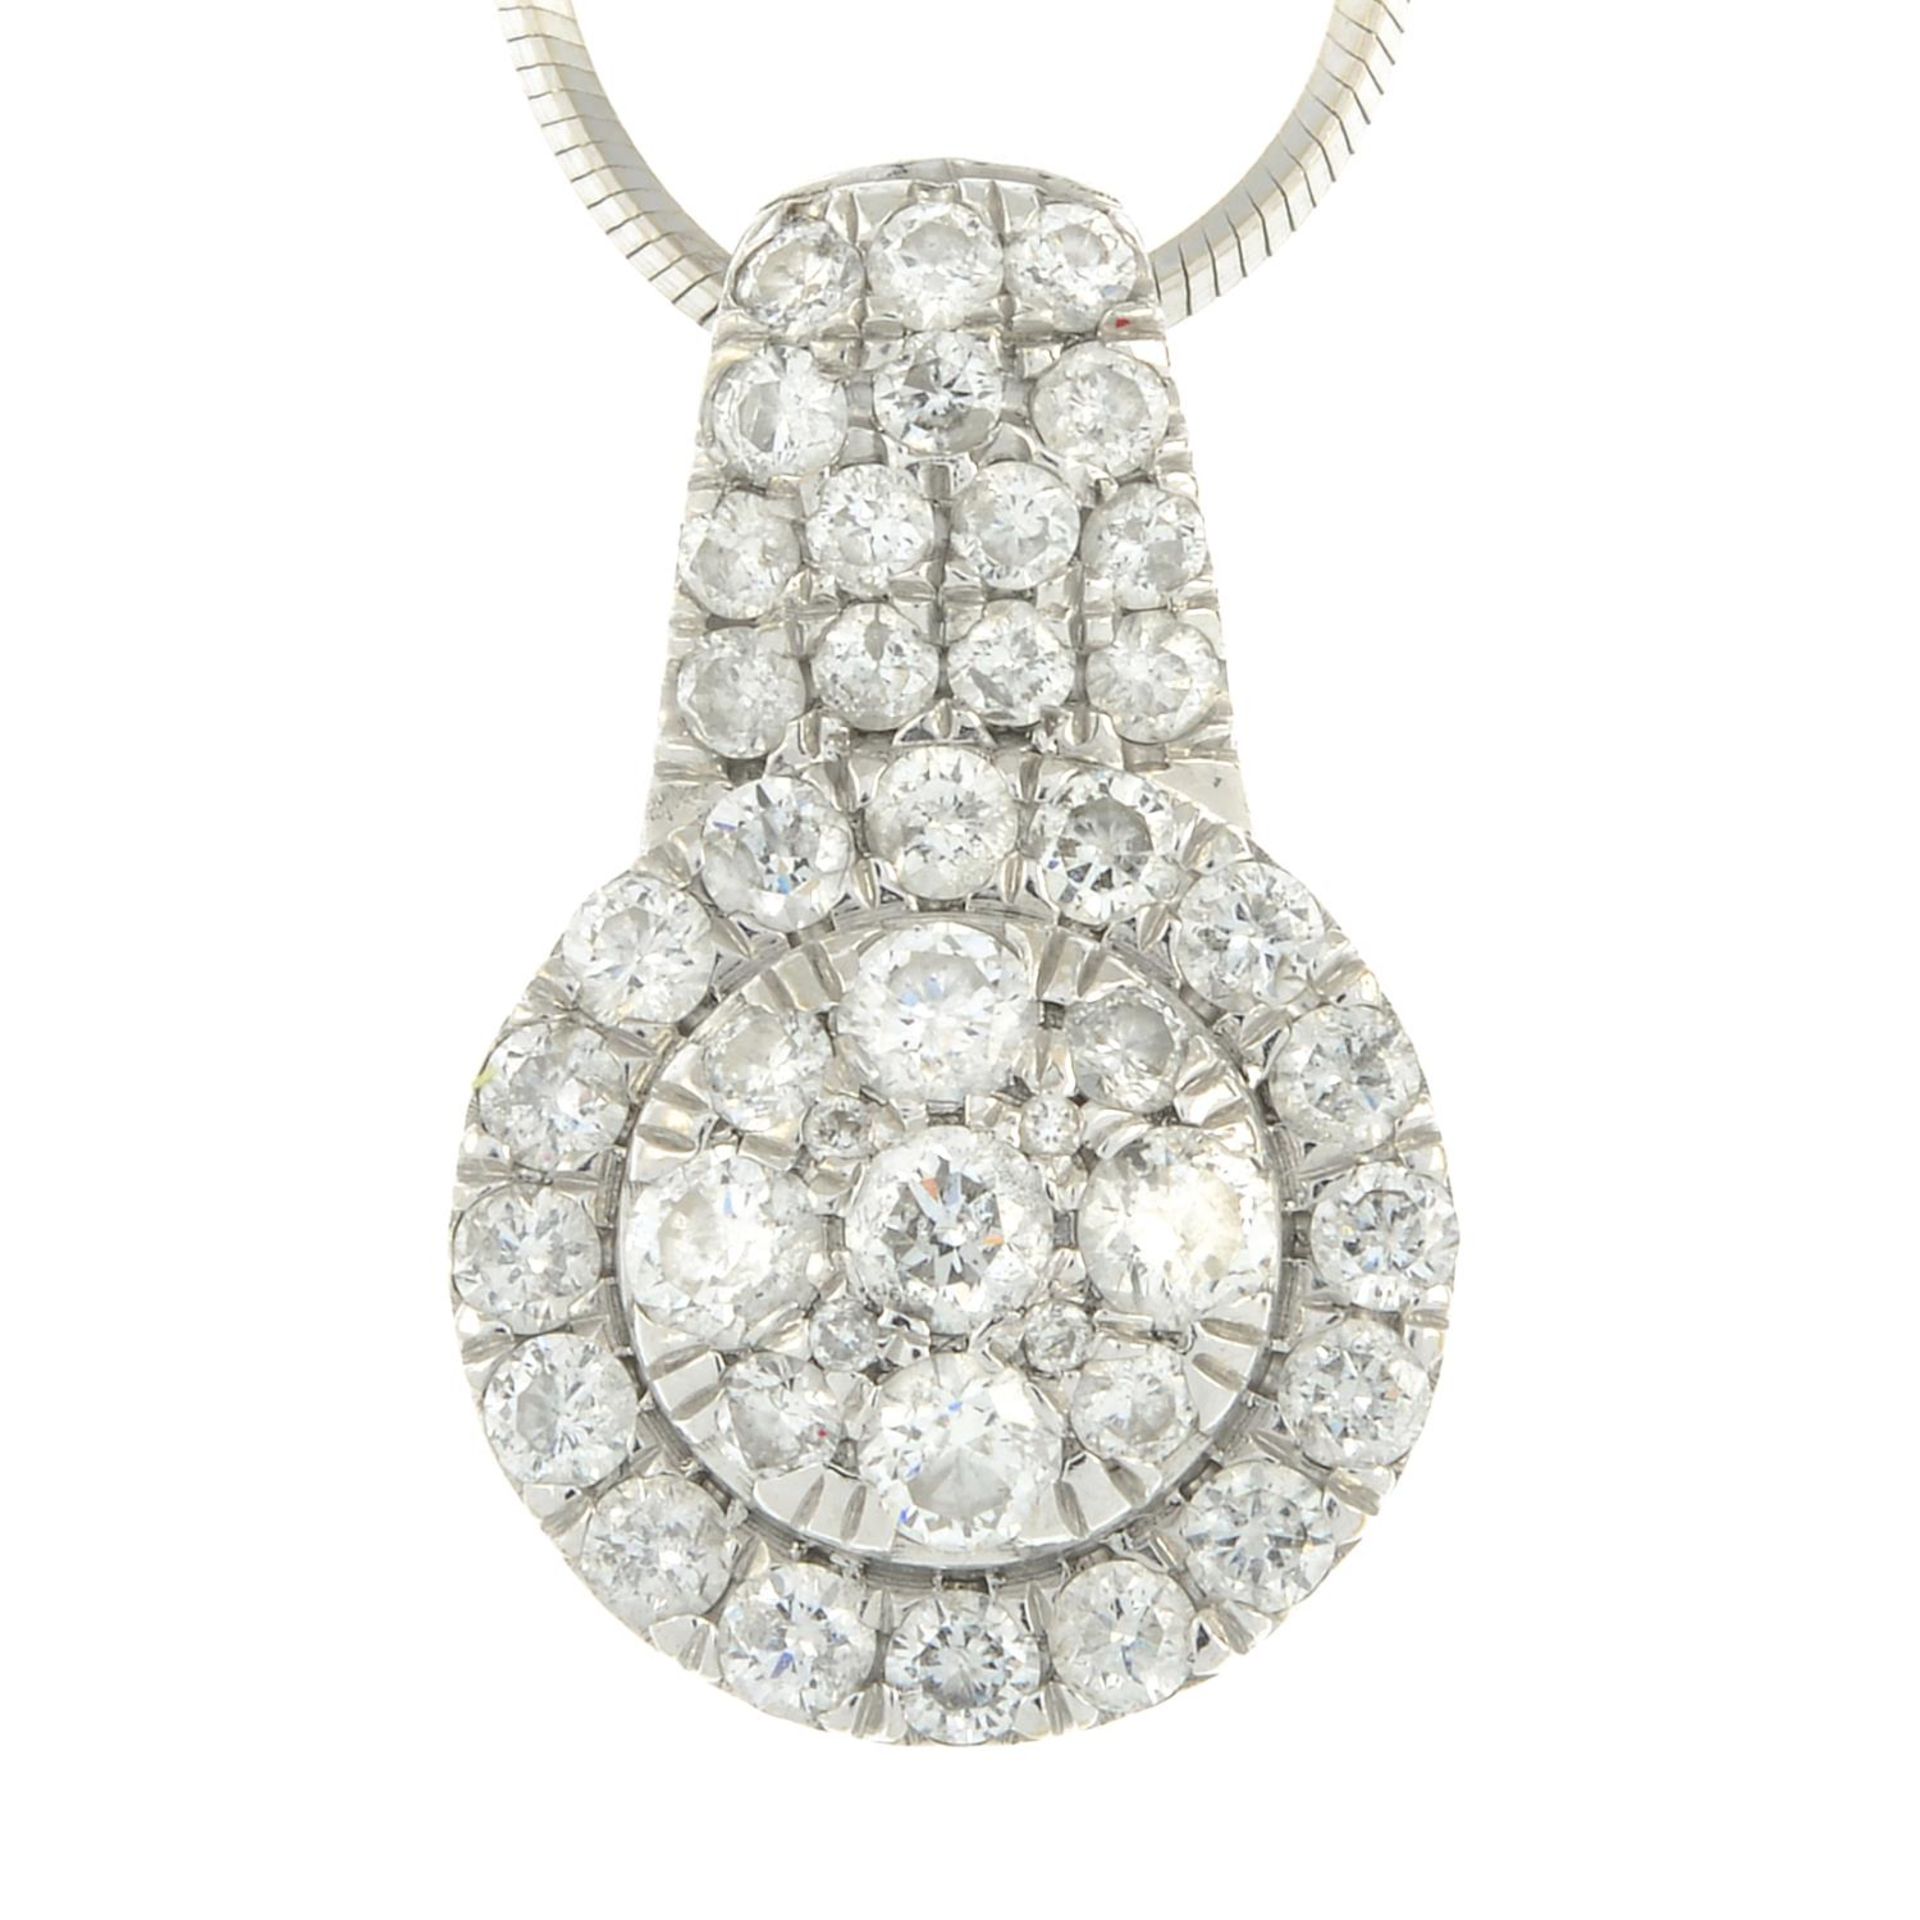 A brilliant-cut diamond cluster pendant,